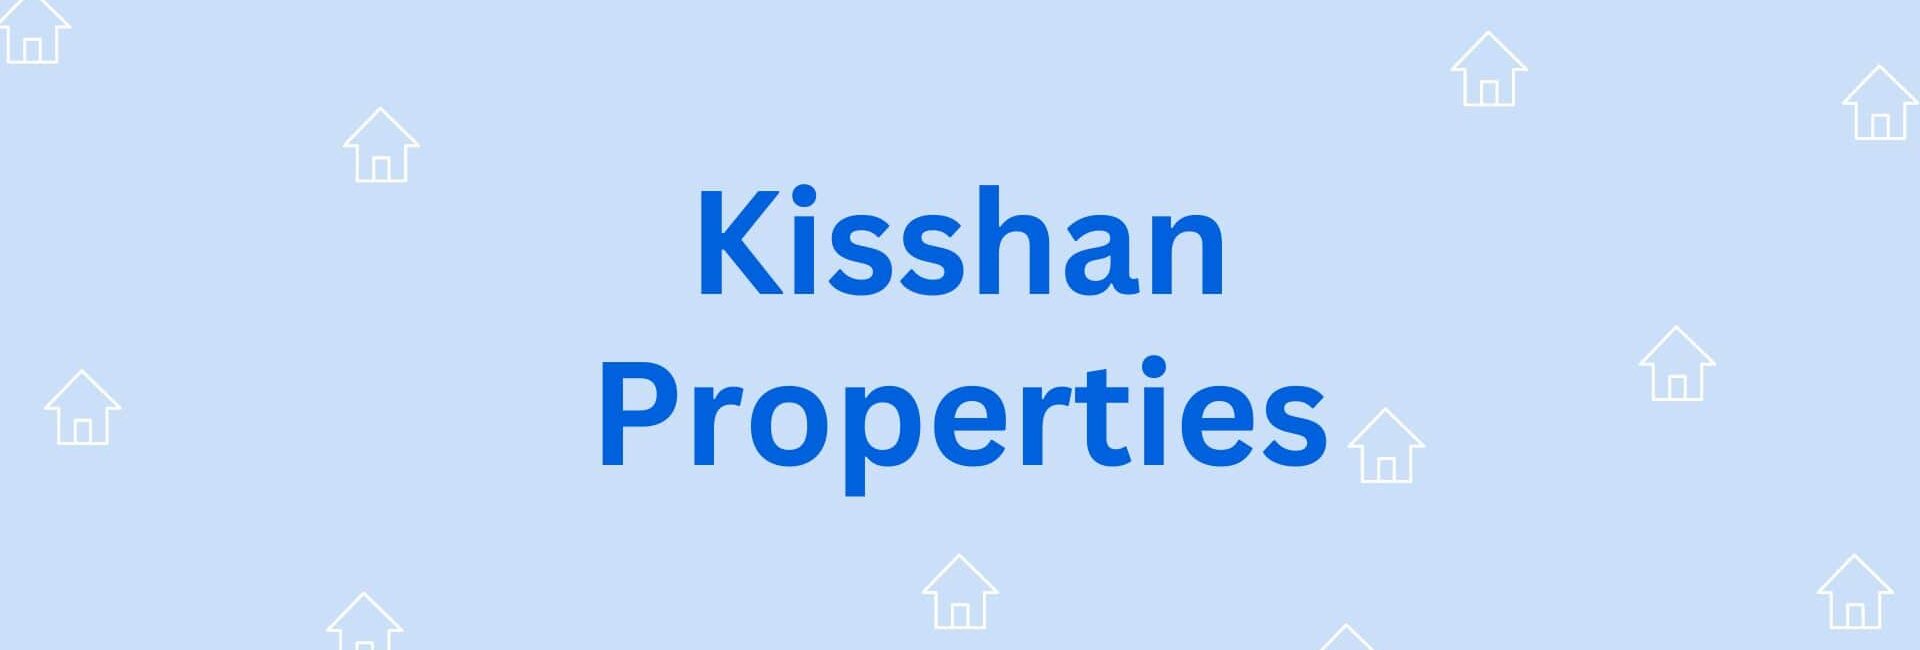 Kisshan Properties - Real Estate Agent in Hisar Uttam Nagar